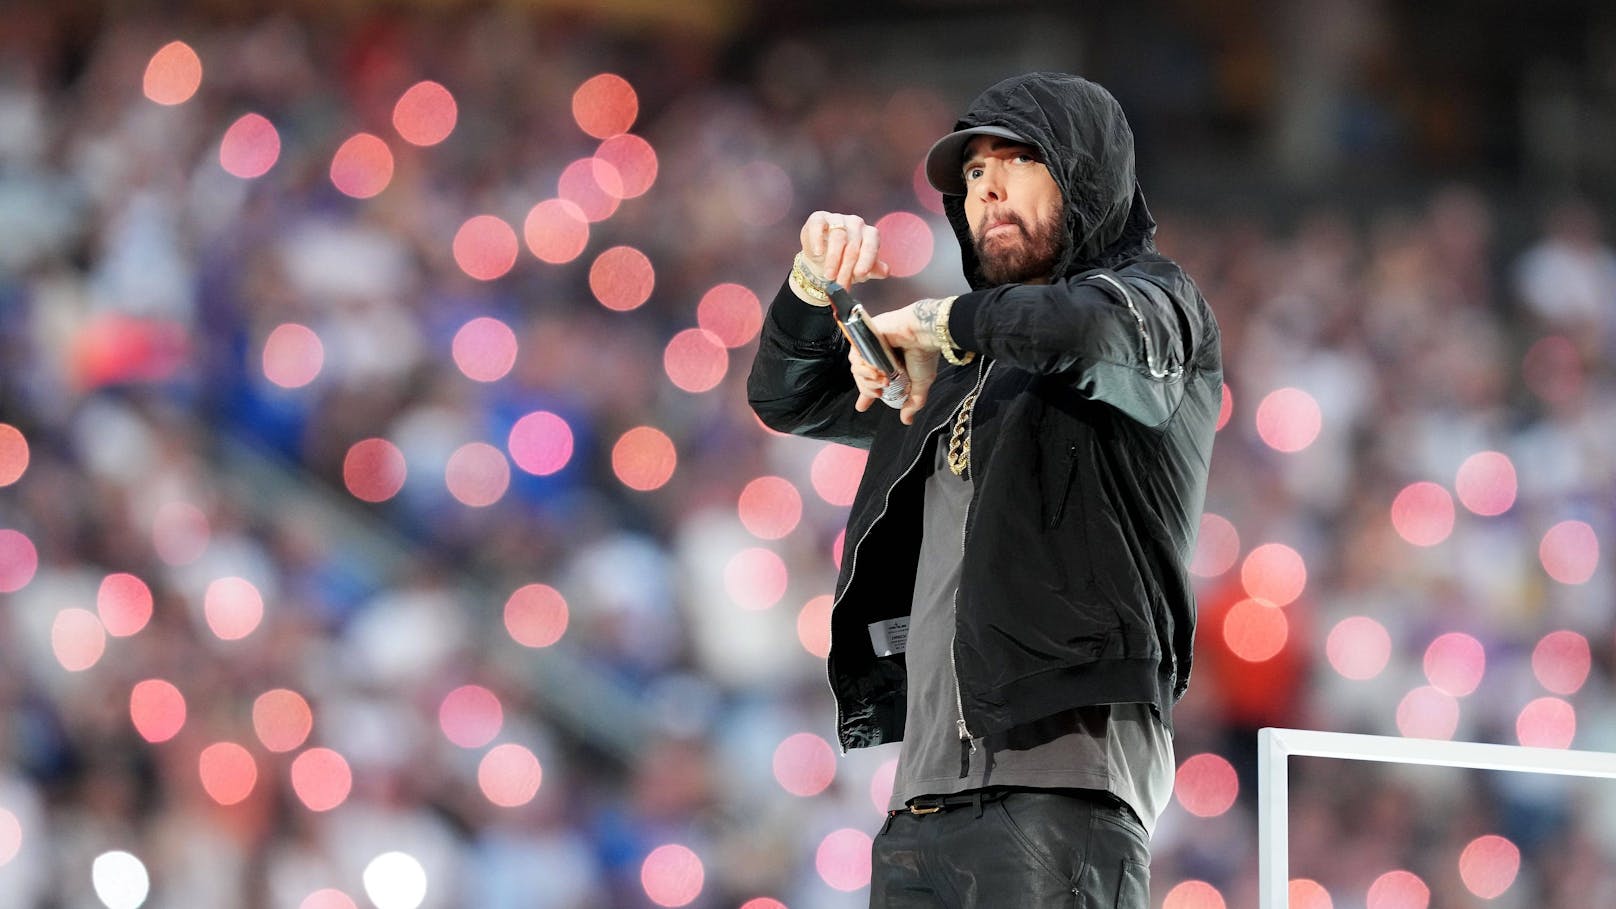 Großer Erfolg vorbei? Neues Eminem-Album floppt